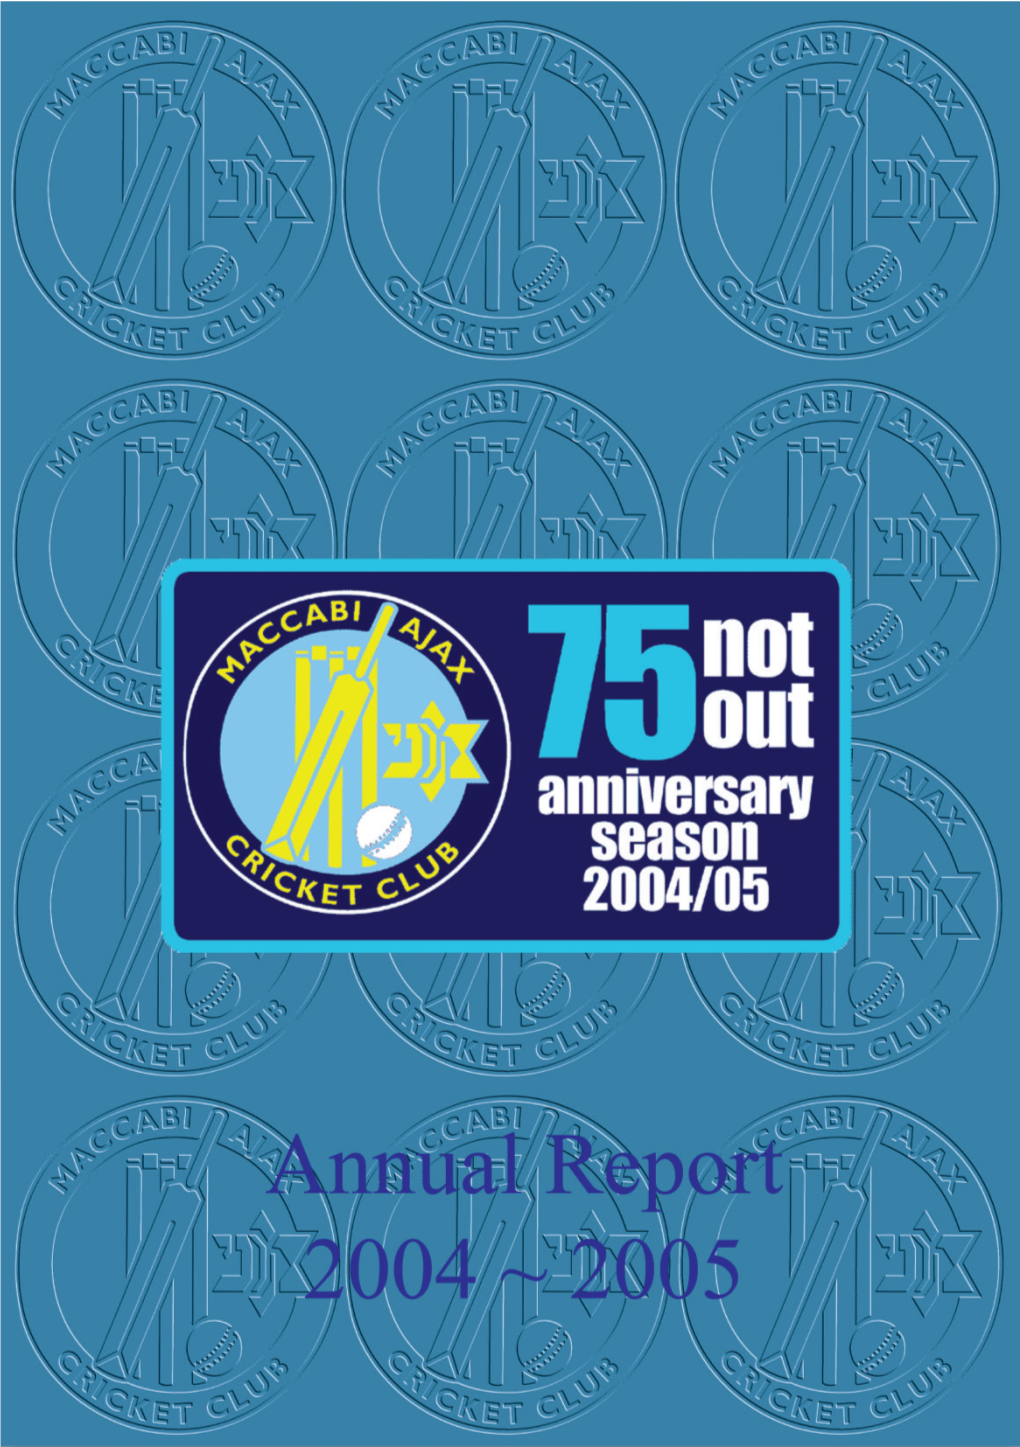 2004/05 Annual Report